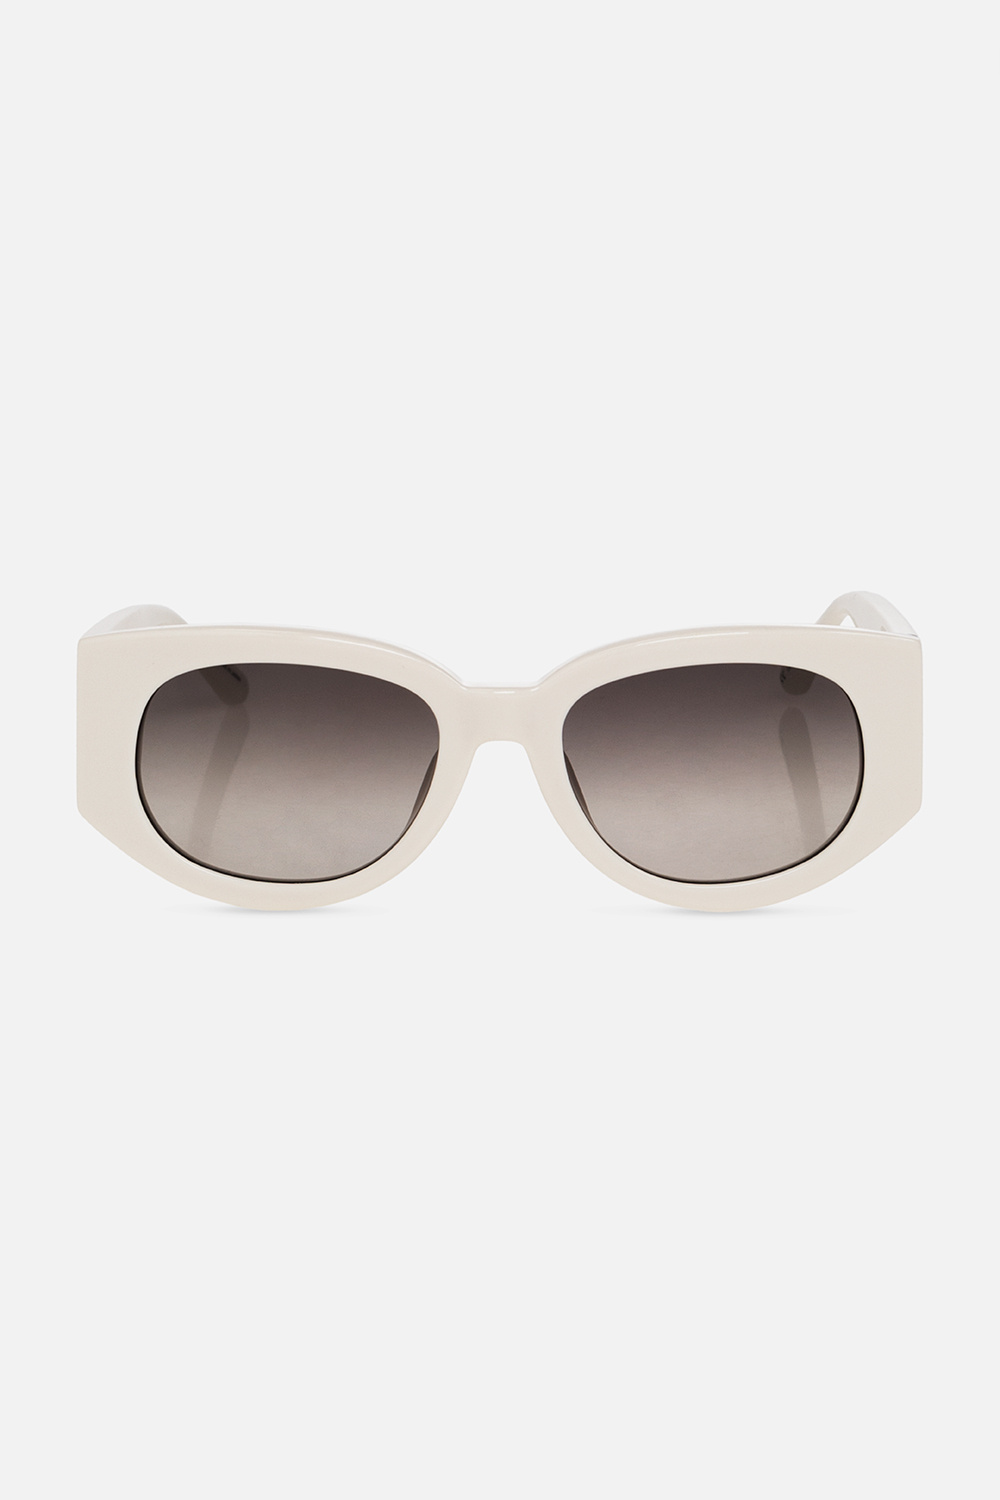 Linda Farrow ‘Debbie’ sunglasses